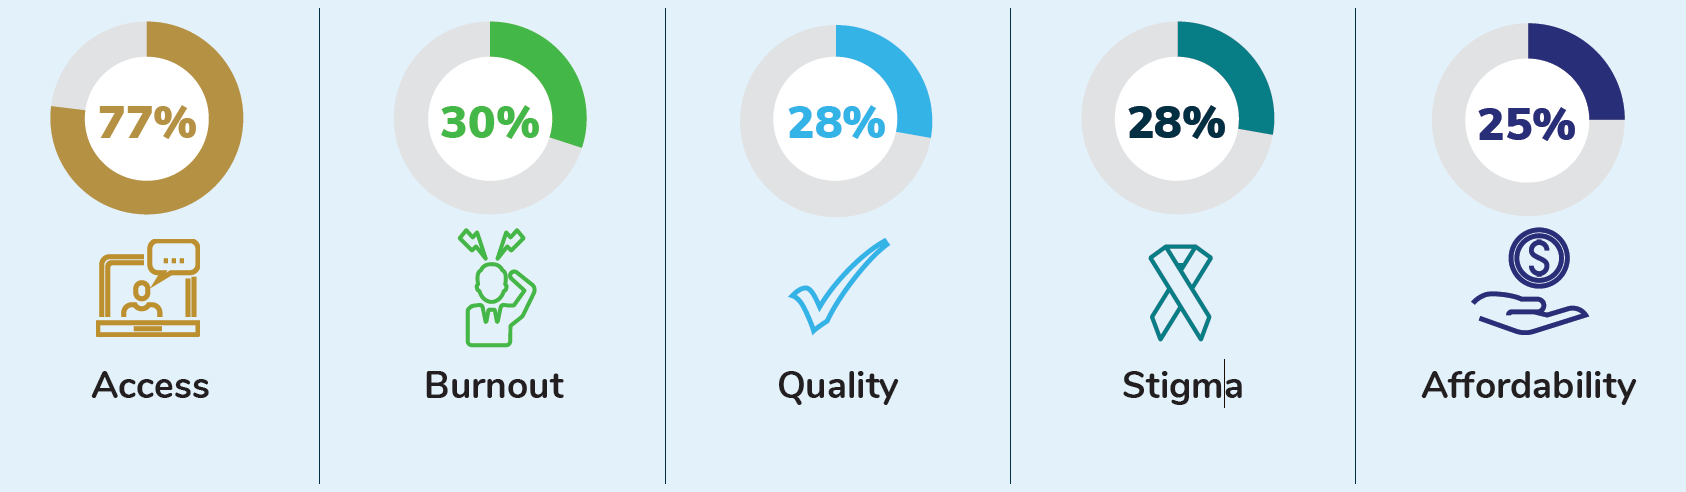 77% access, 30% burnout, 28% quality, 28% stigma, 25% affordability